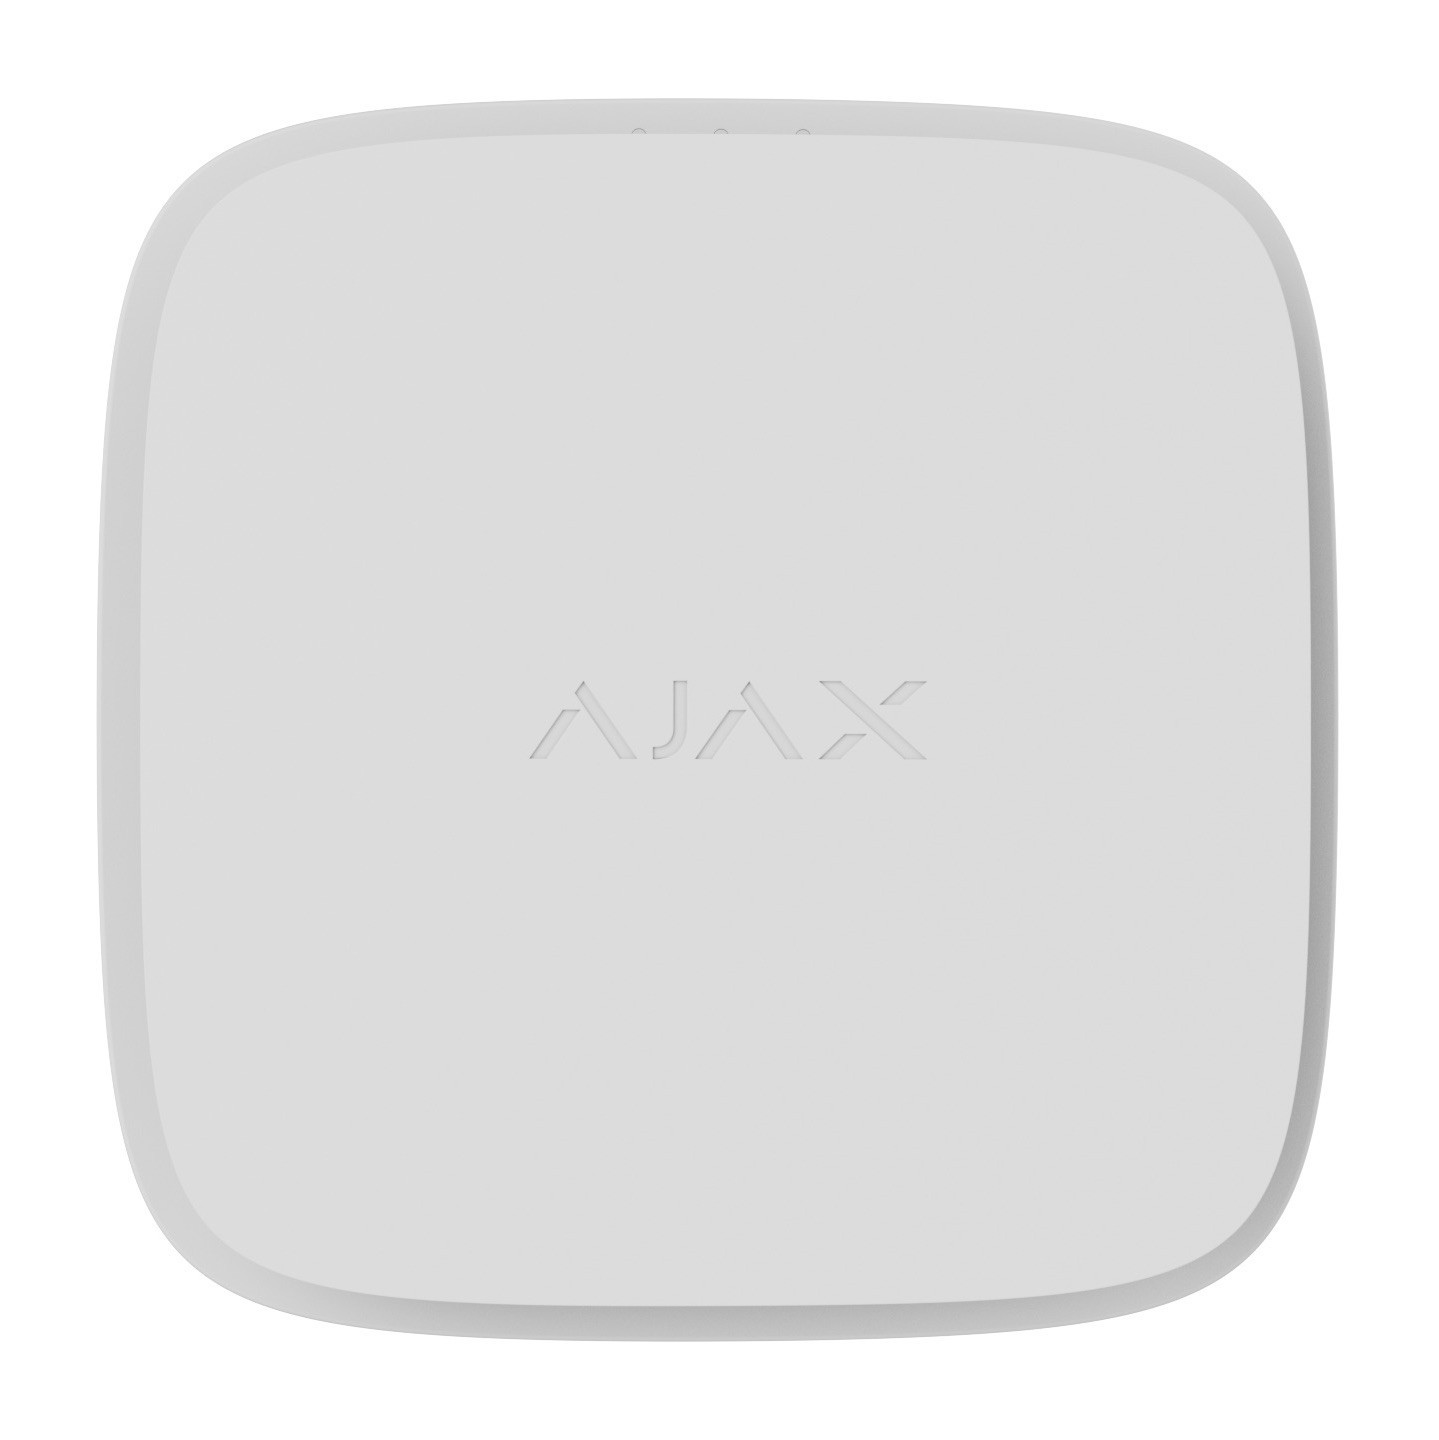 Бездротовий пожежний датчик температури Ajax FireProtect 2 RB (Heat) White